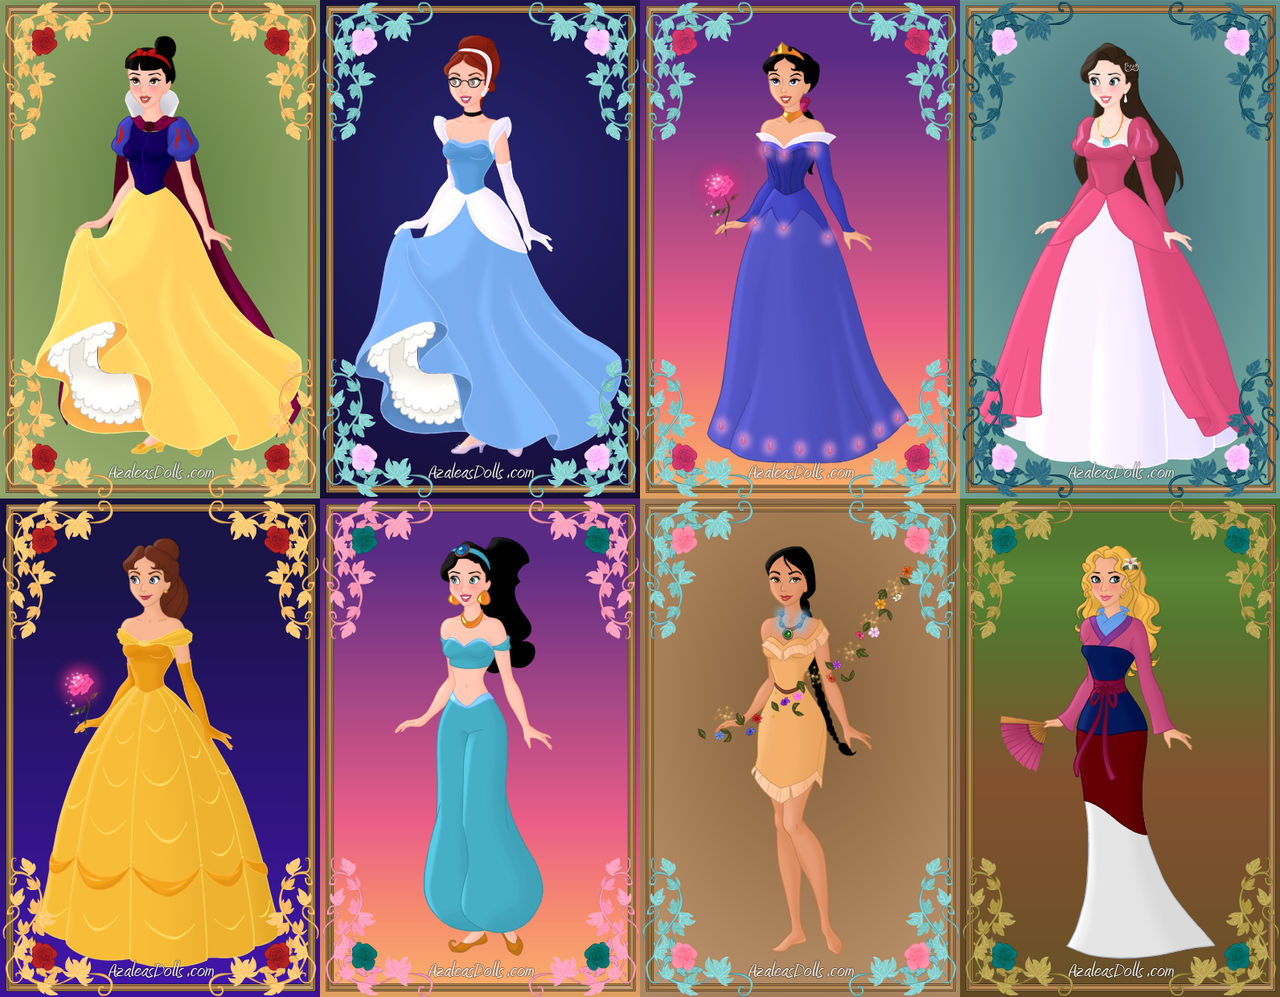 MMN's Disney Princesses Pt 1 by MagicMovieNerd on DeviantArt